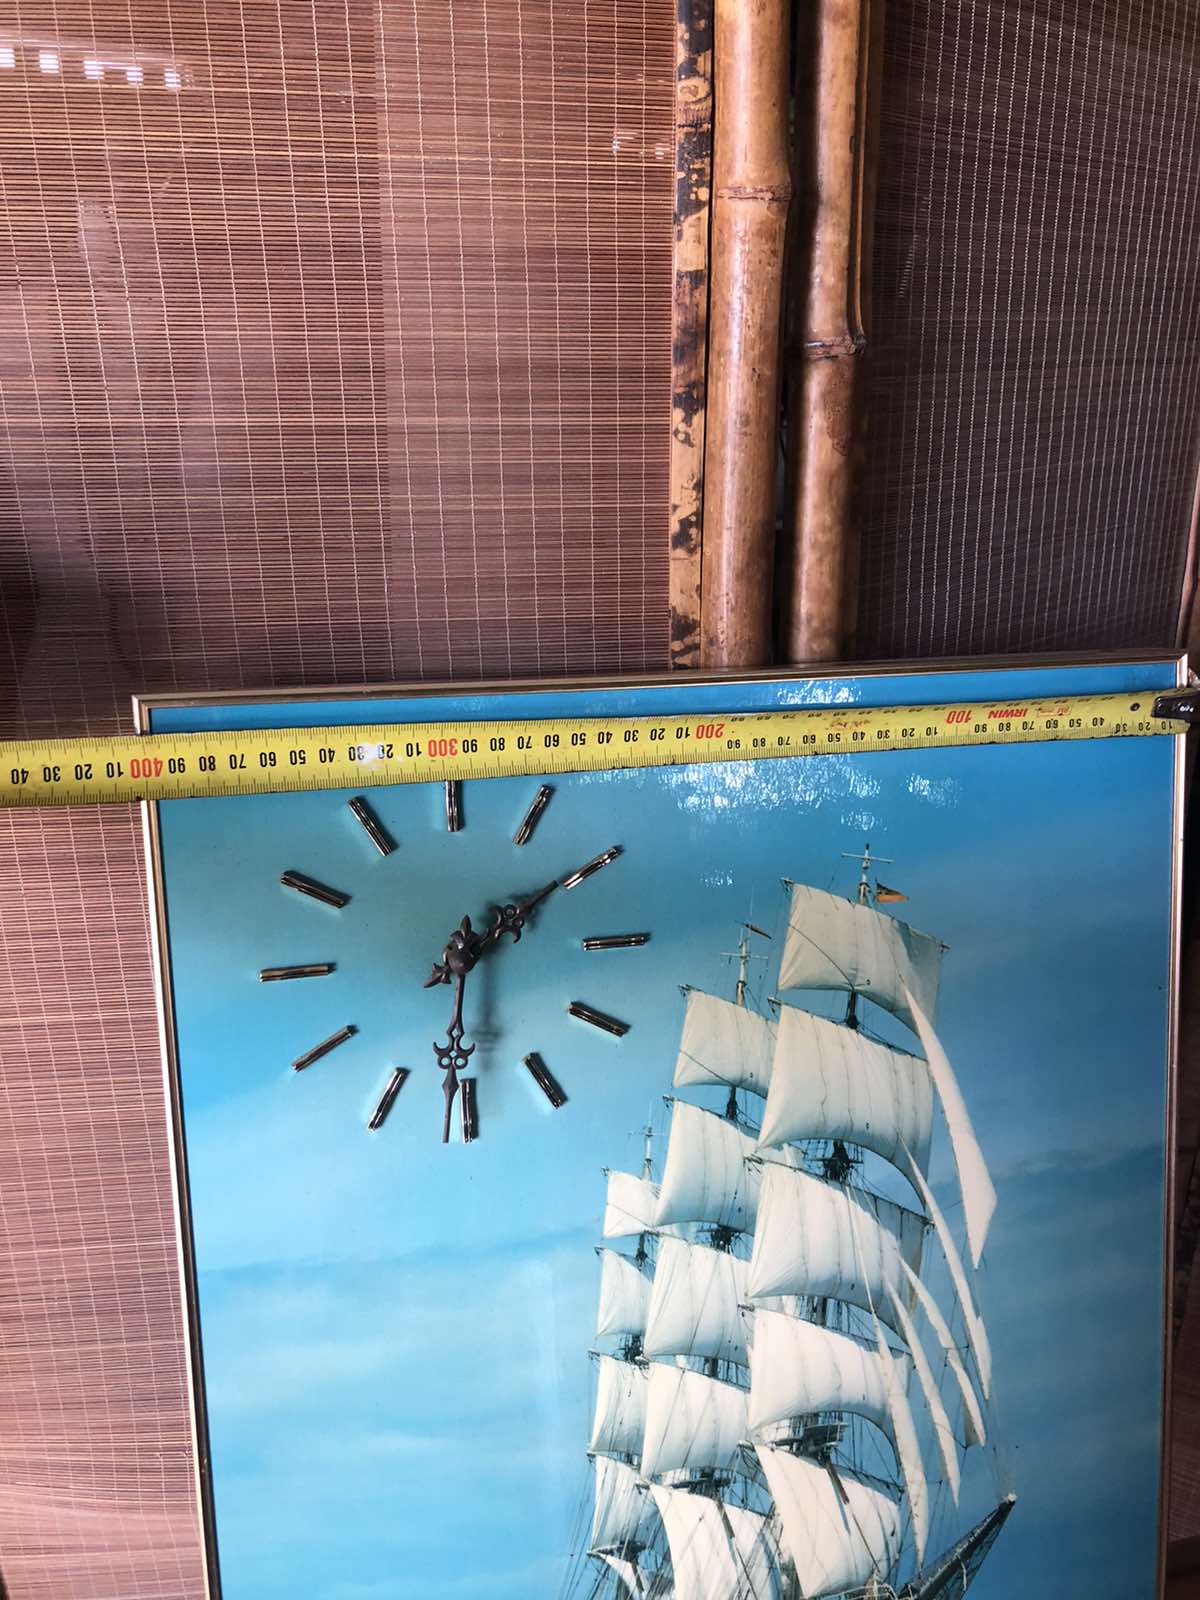 Mid century ship clock print